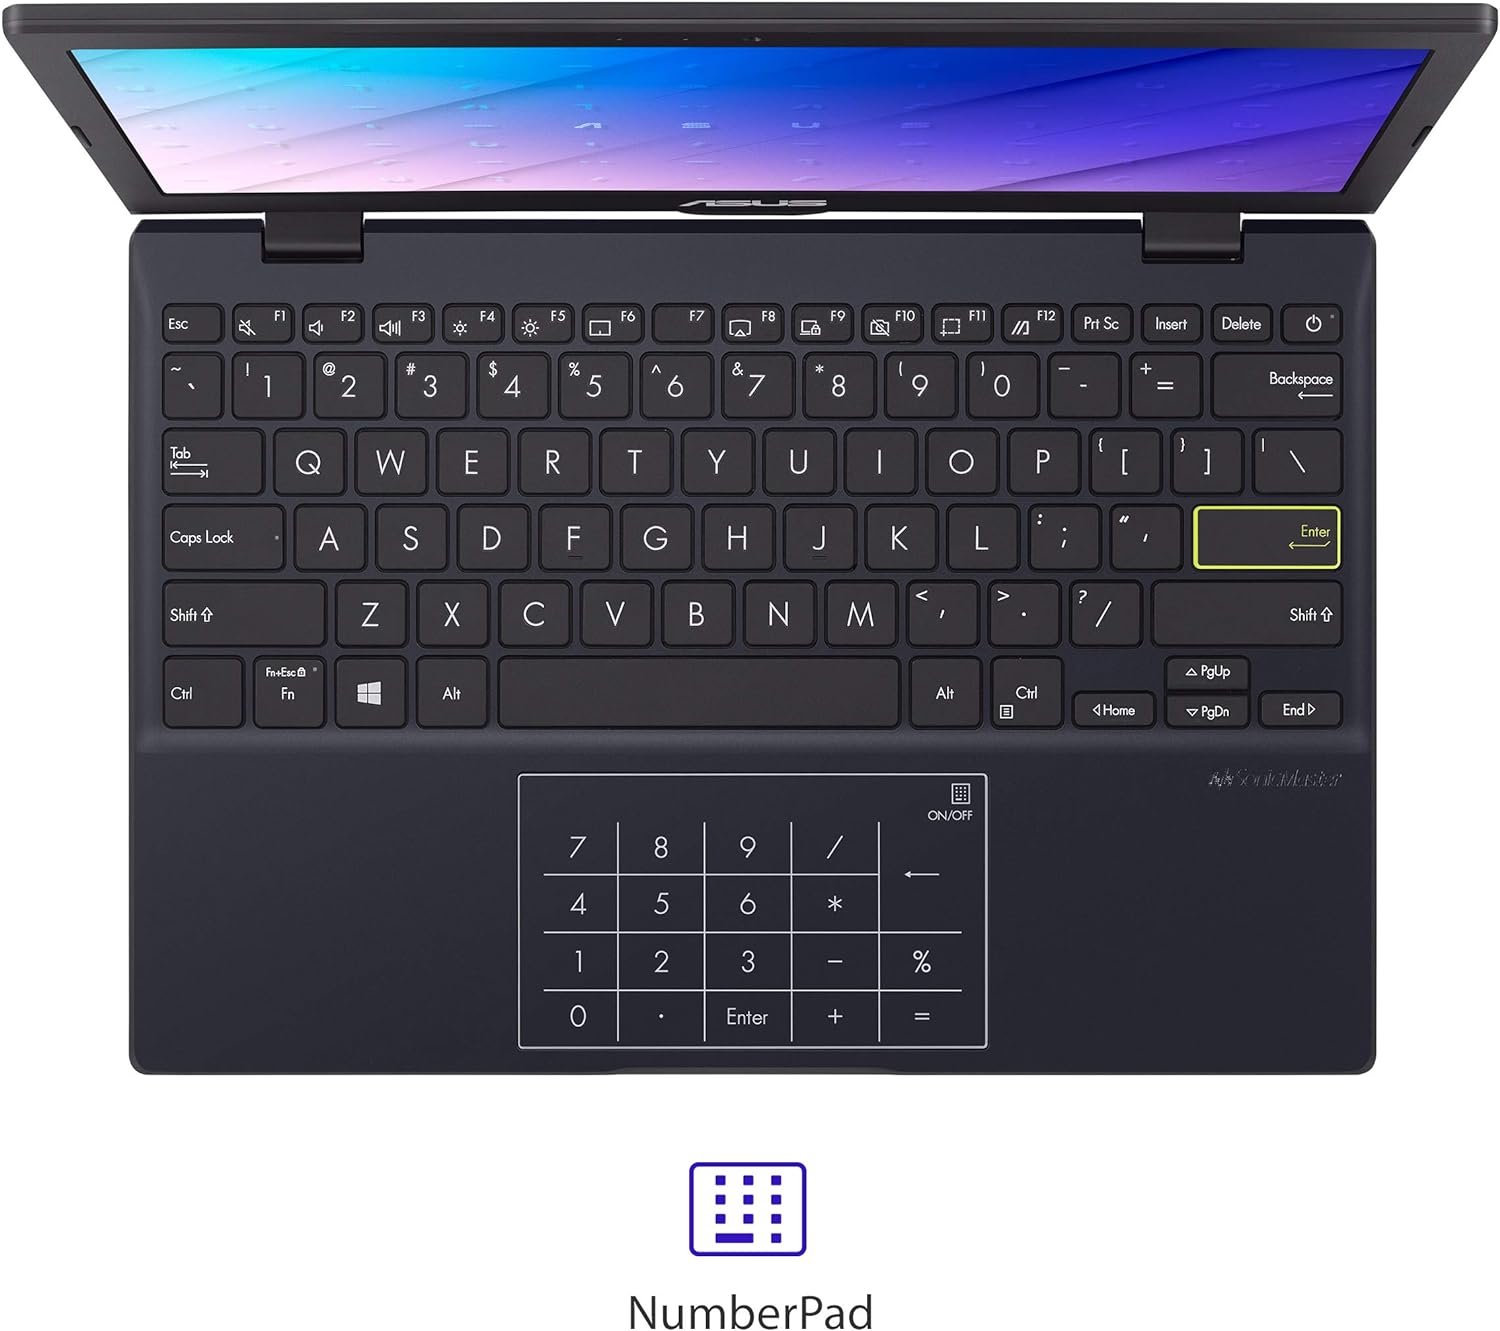 ASUS Notebook E210 11.6” Ultra Thin, Intel Celeron N4020 Processor - $150